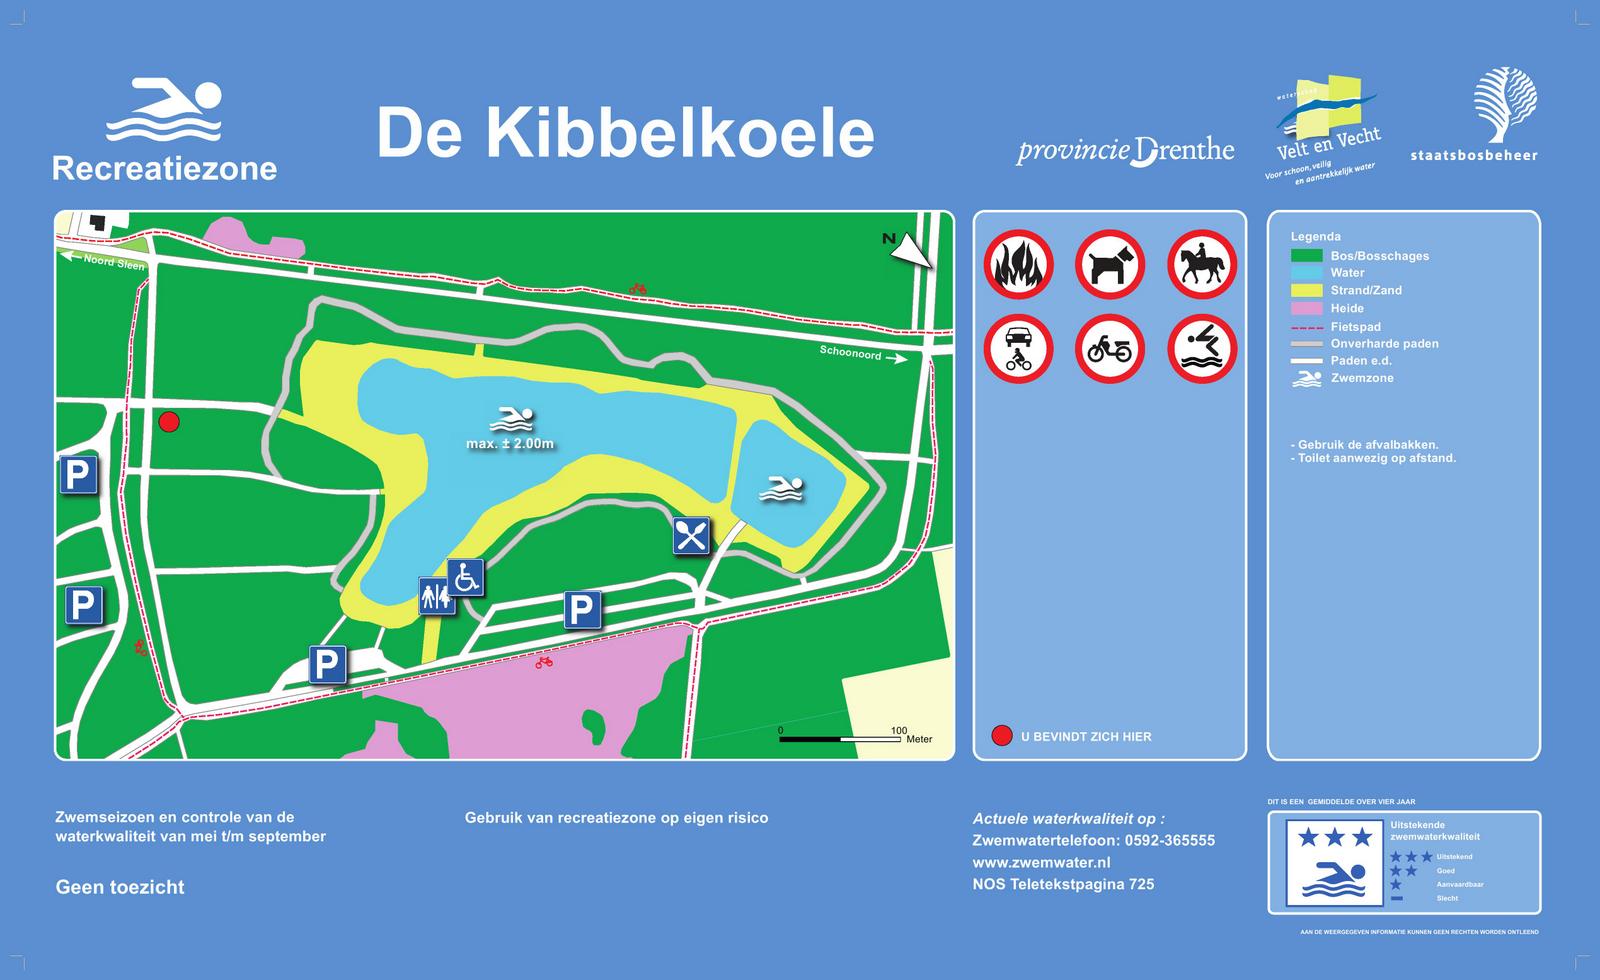 The information board at the swimming location De Kibbelkoele